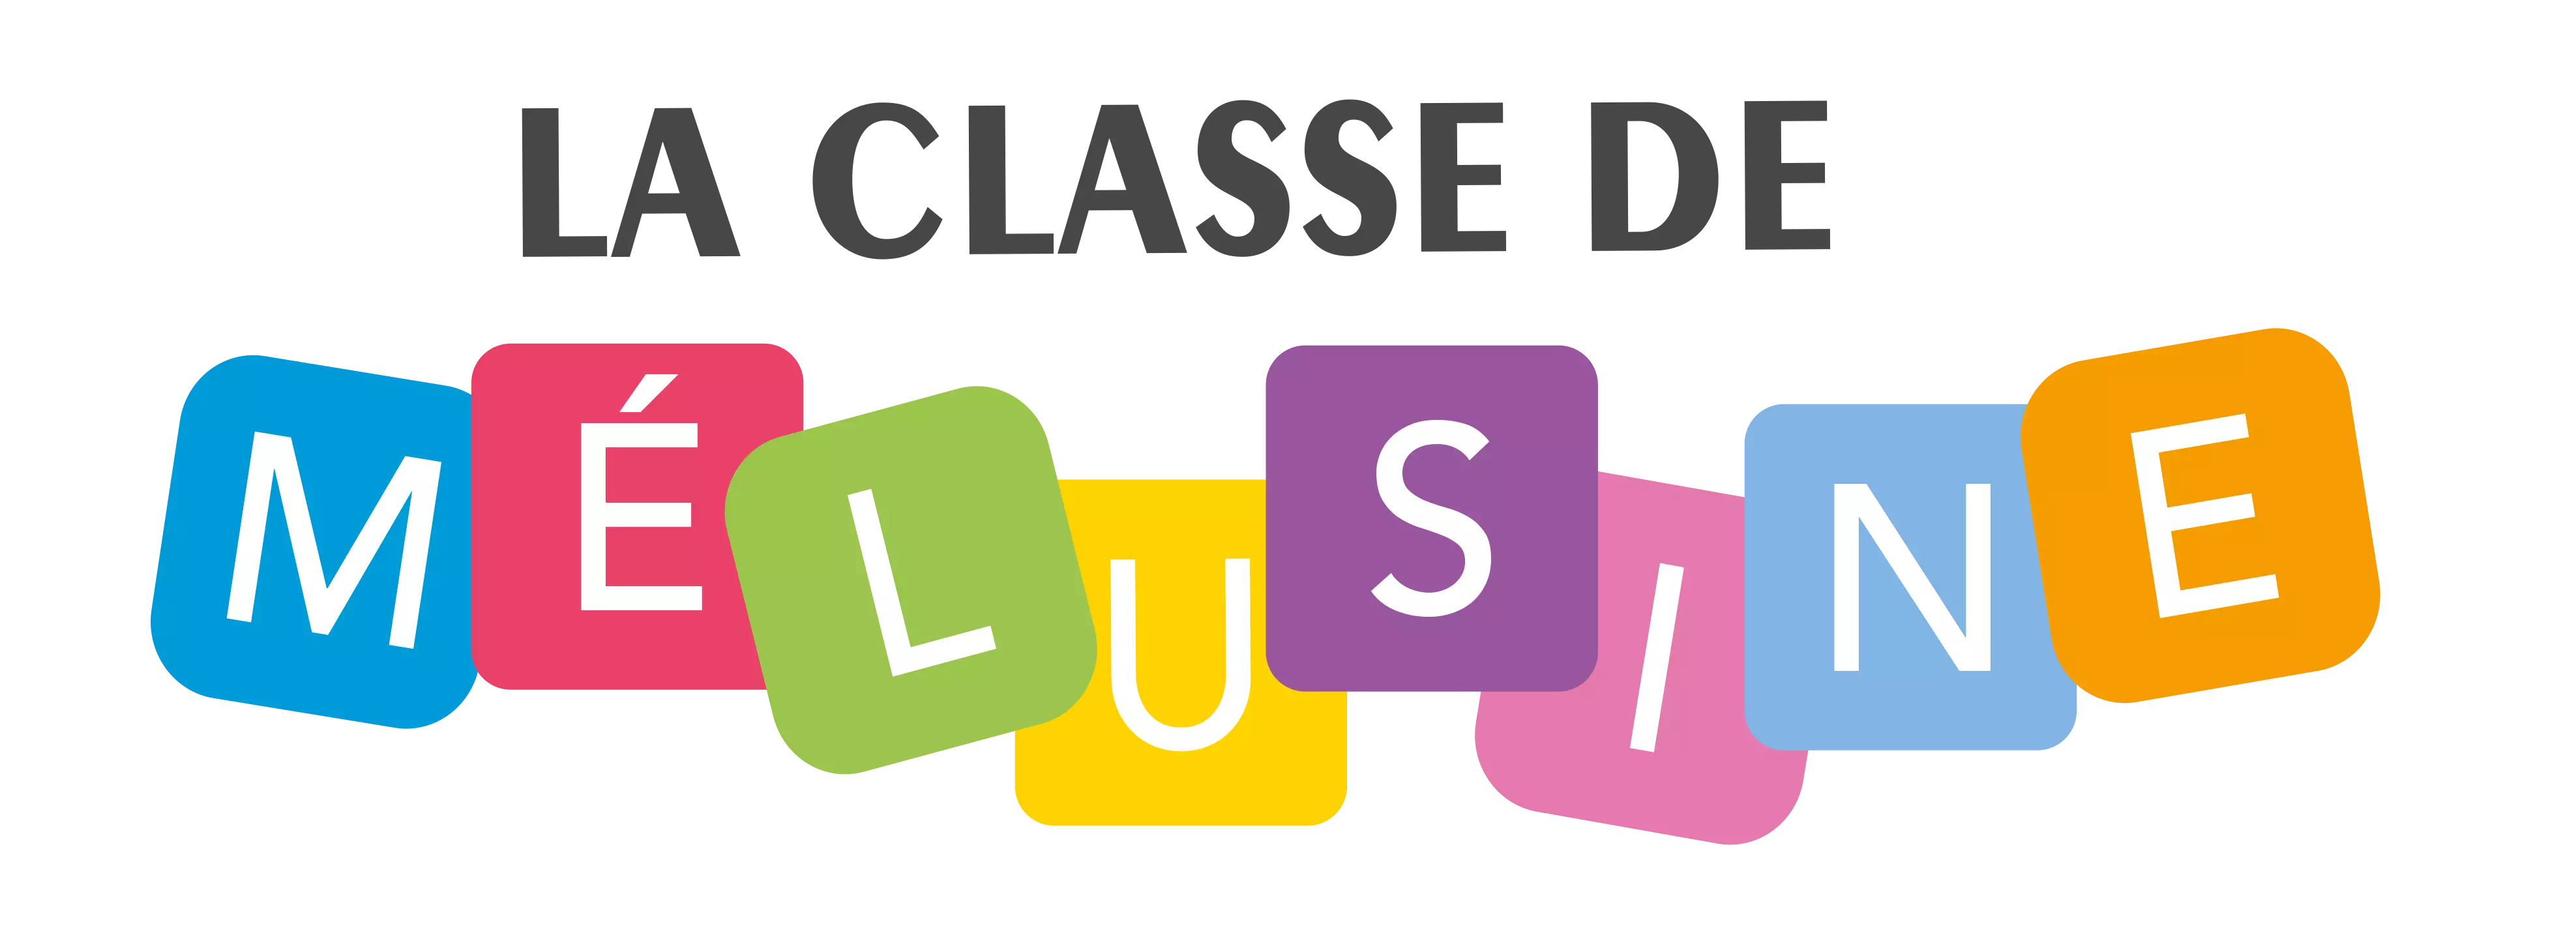 logo de la classe de mélusine